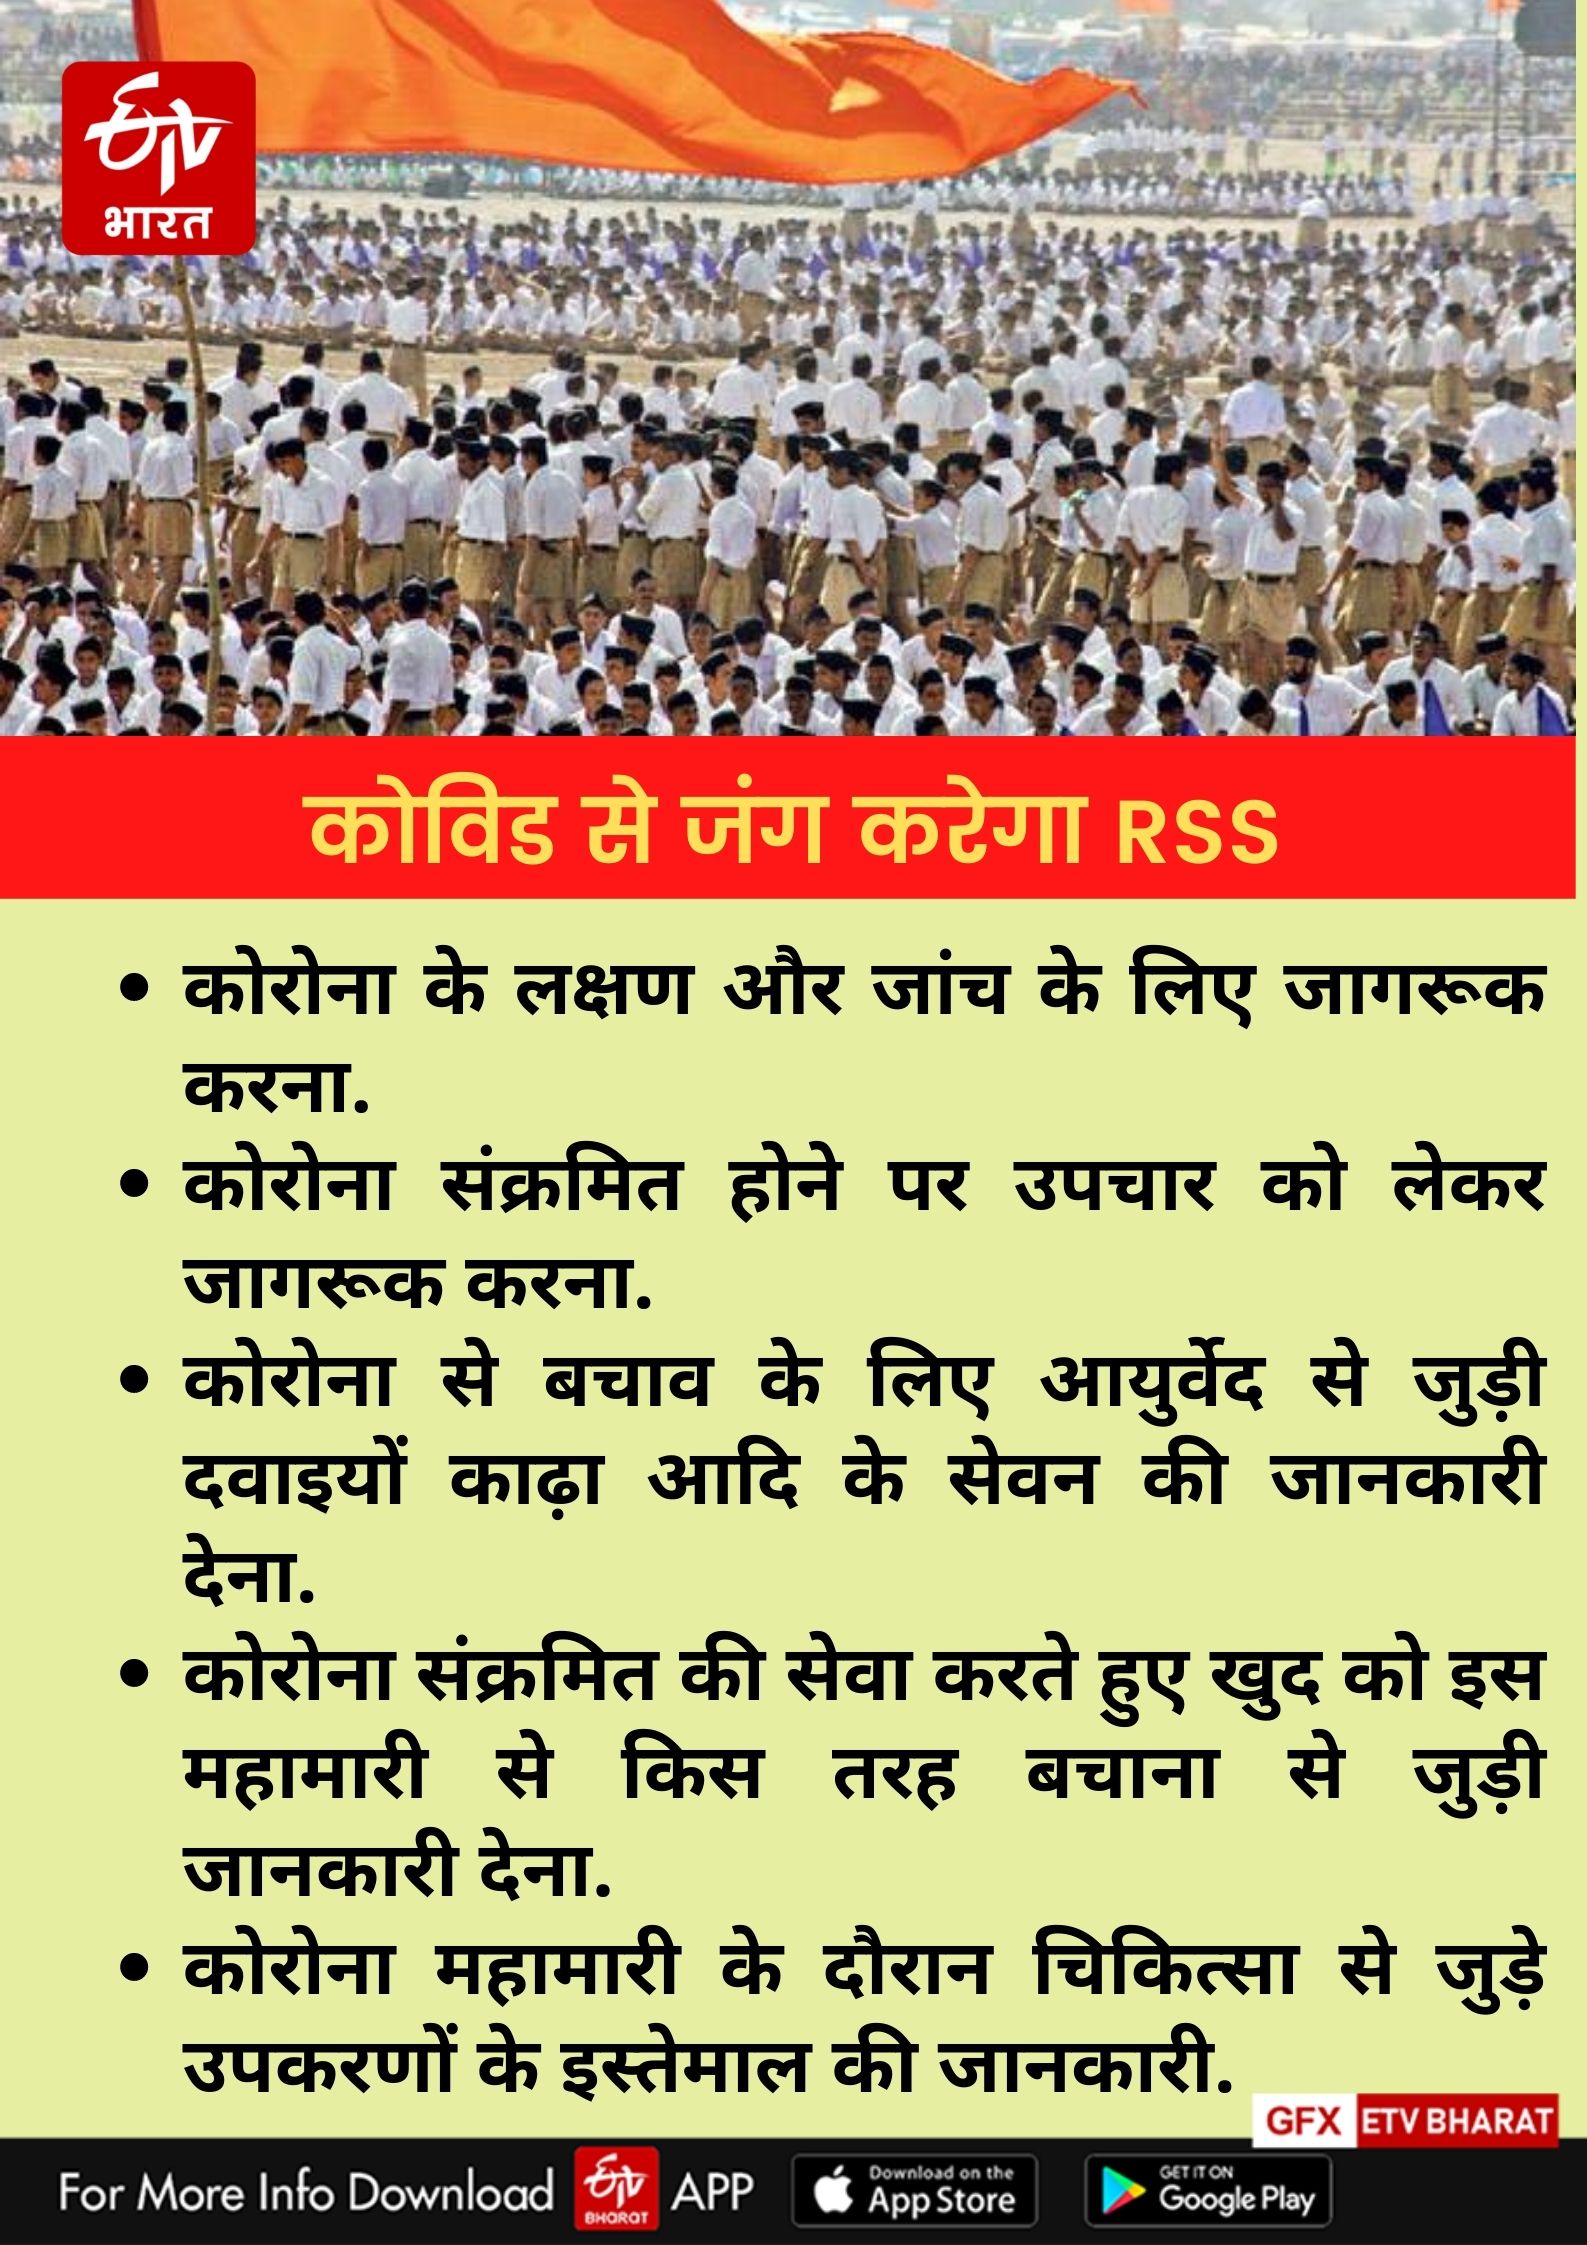 RSS Covid Relief Campaign